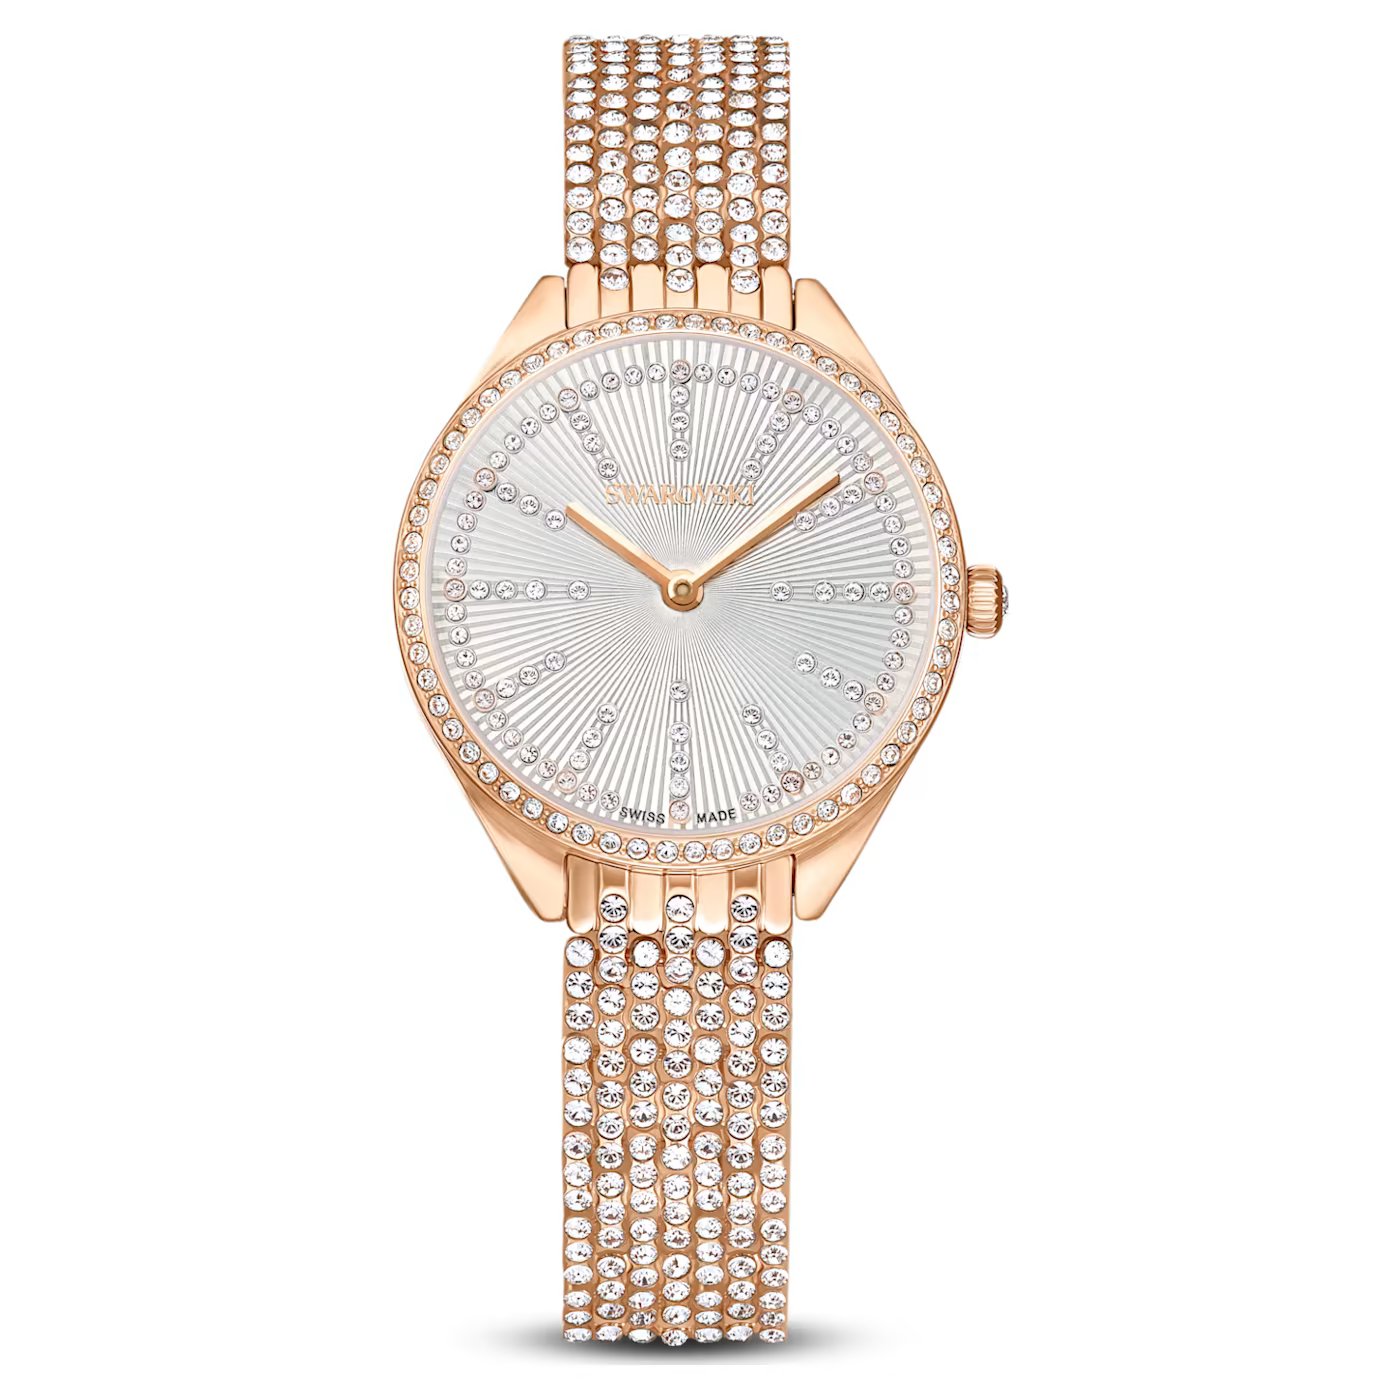 63c959735df65_attract-watch--swiss-made--full-pavé--metal-bracelet--rose-gold-tone--rose-gold-tone-finish-swarovski-5644053.jpg